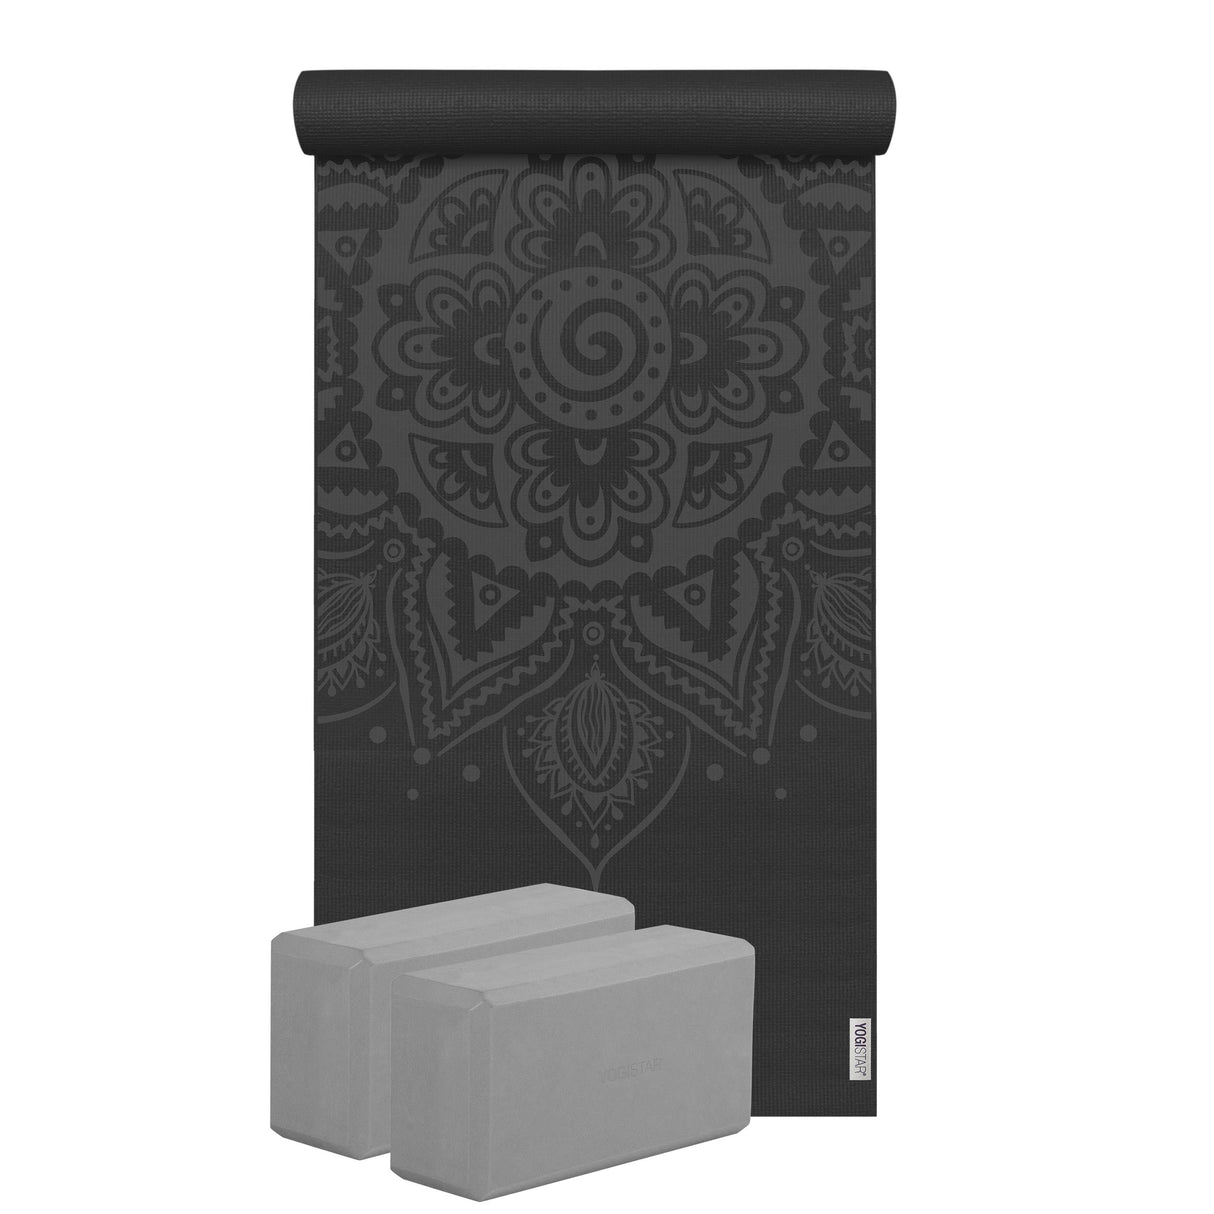 Yoga-Set Starter Edition - spiral mandala (Yogamatte + 2 Yogablöcke) - zen black/graphite